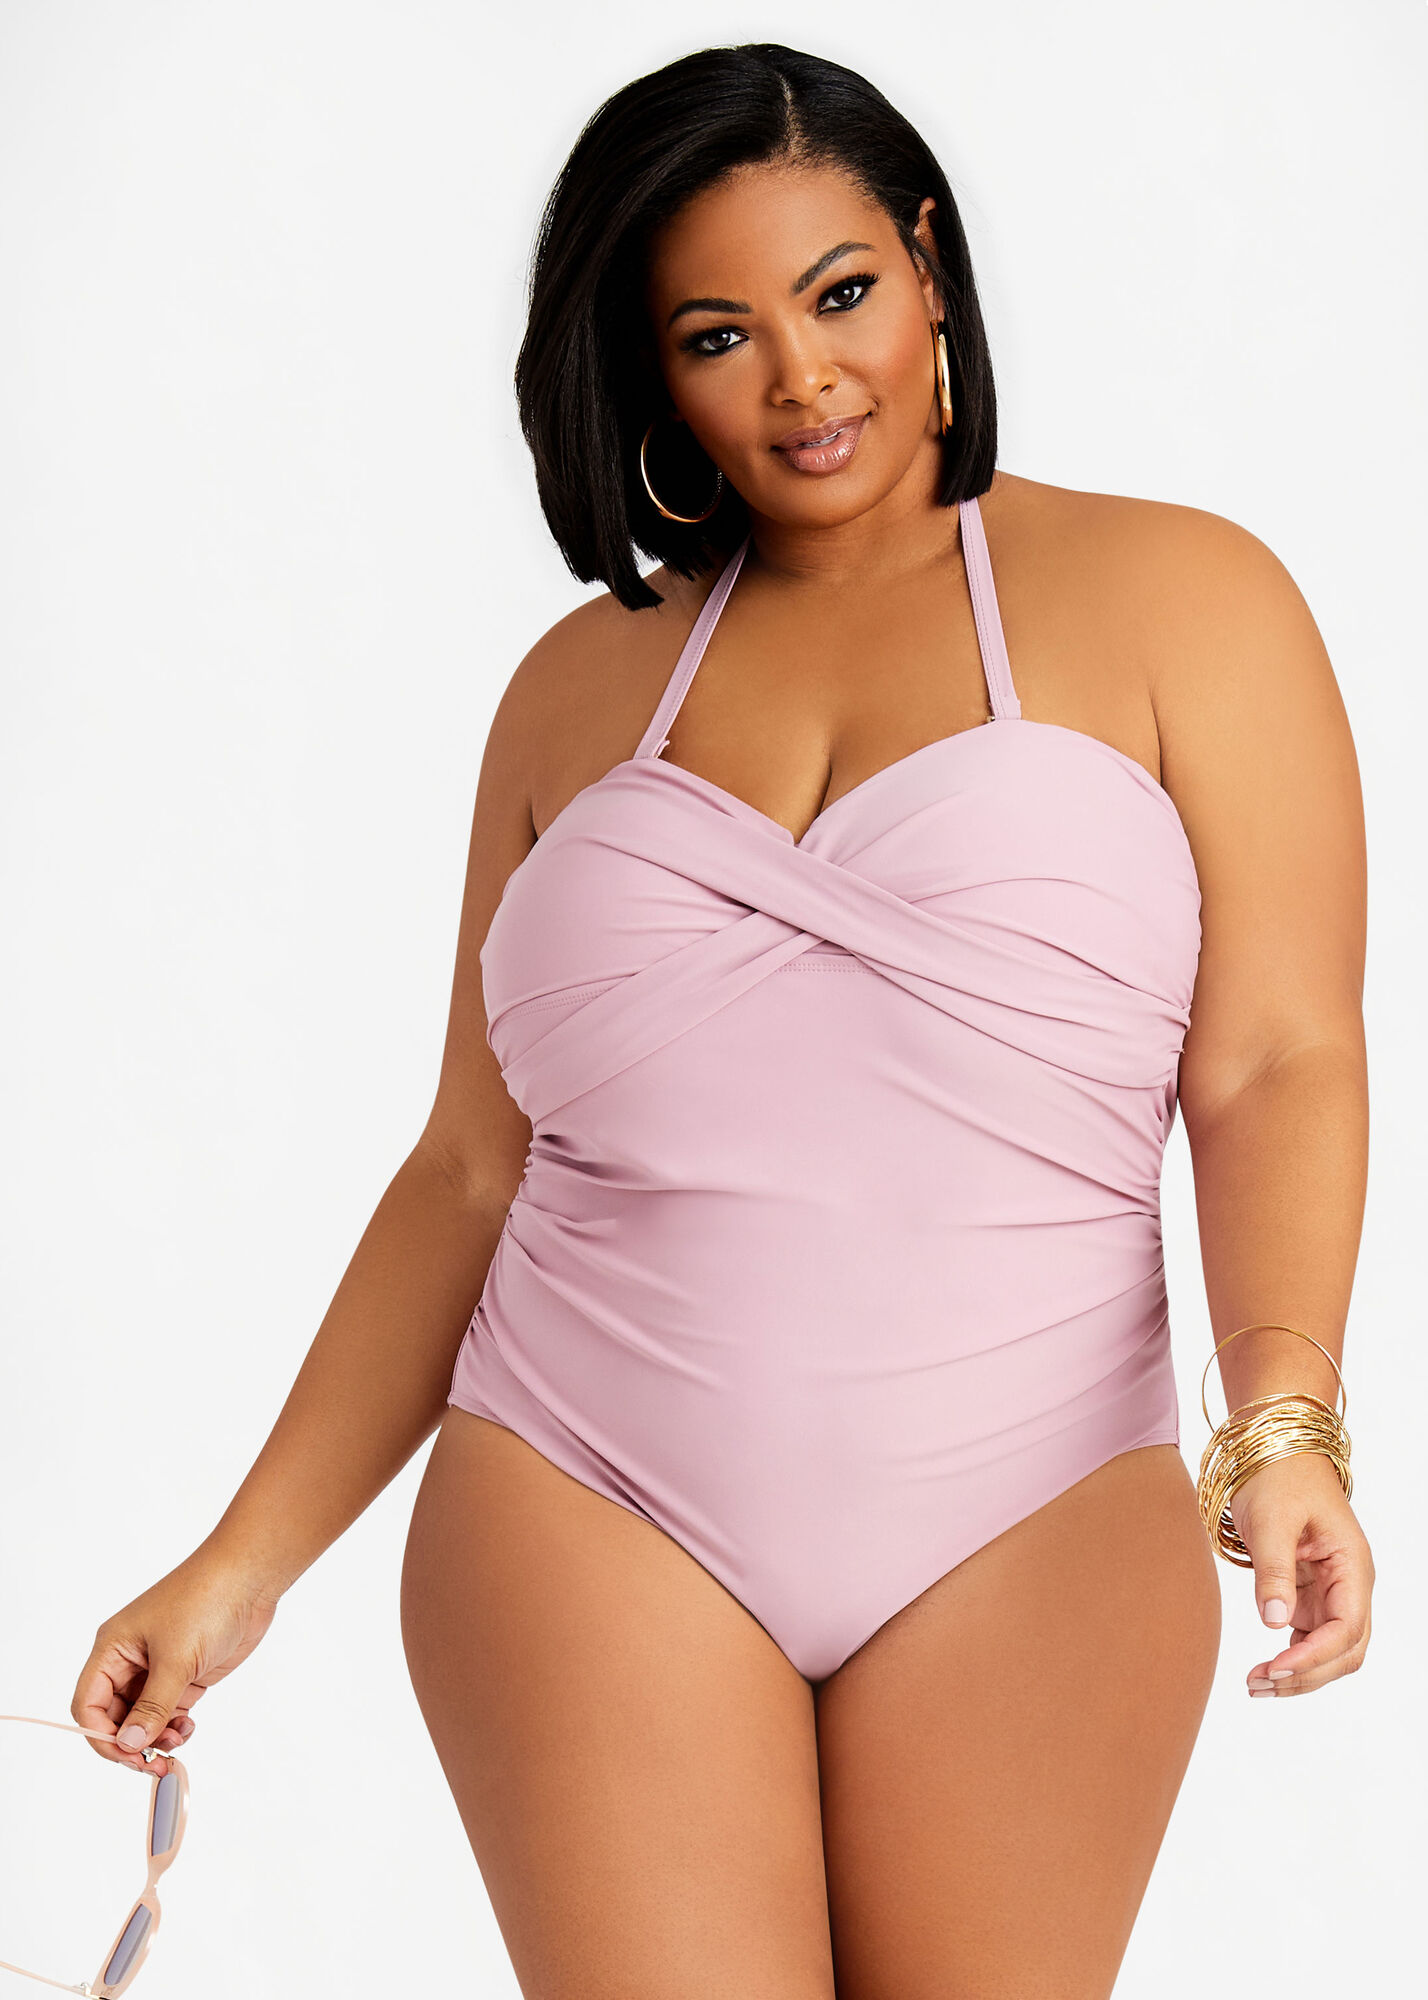 Plus Size Nicole Miller One Swimsuit Tummy Control